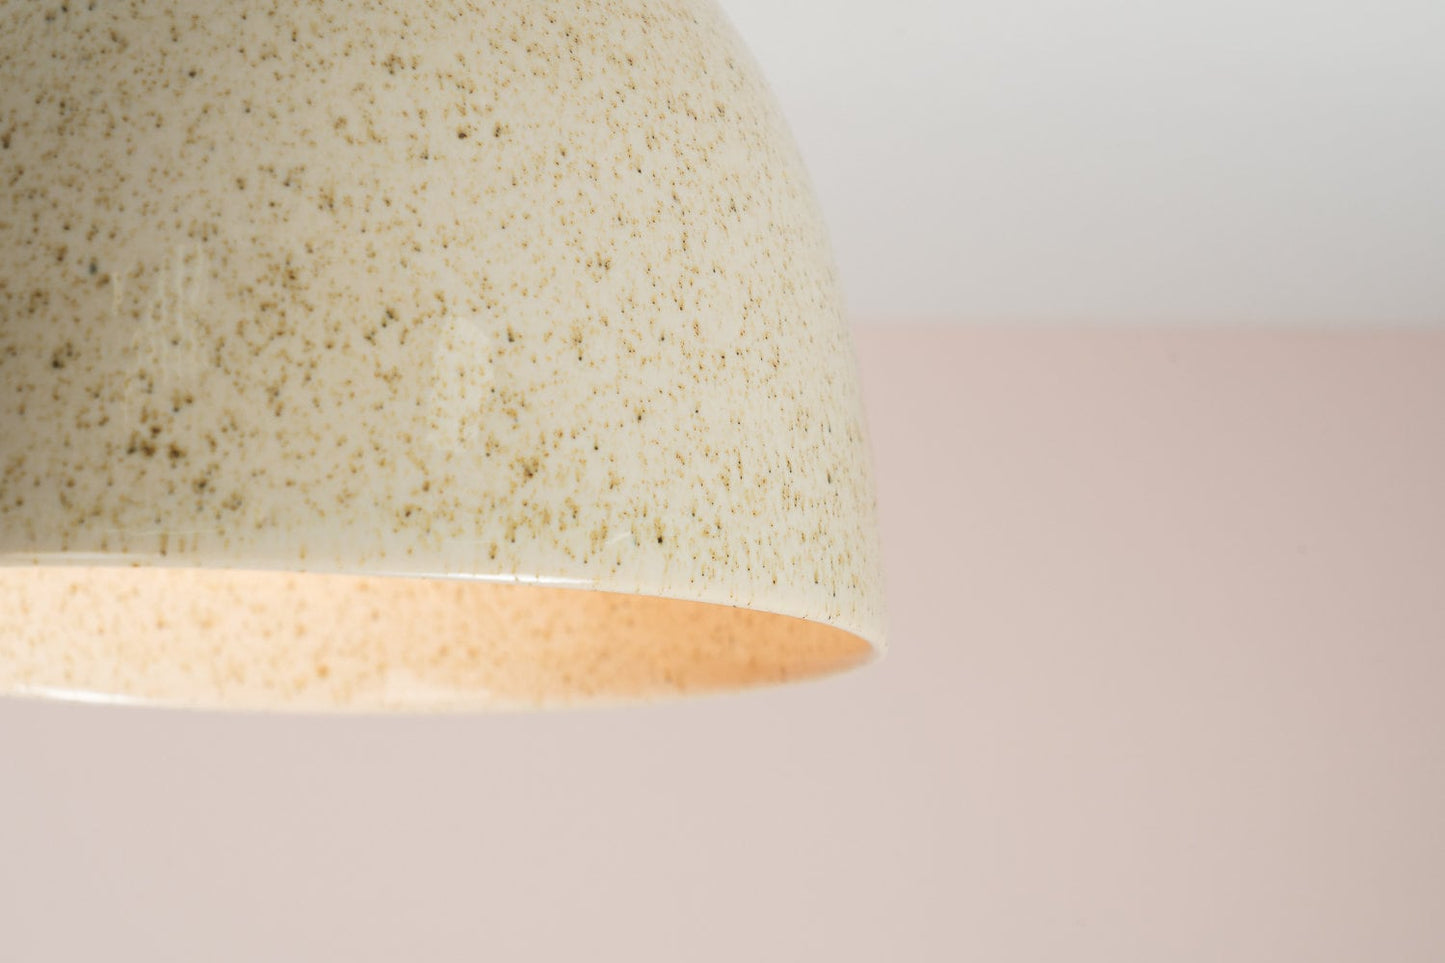 Speckled Cream Gloss Element Flush Mount Ceiling Light in Ceramic and Oak by StudioHaran